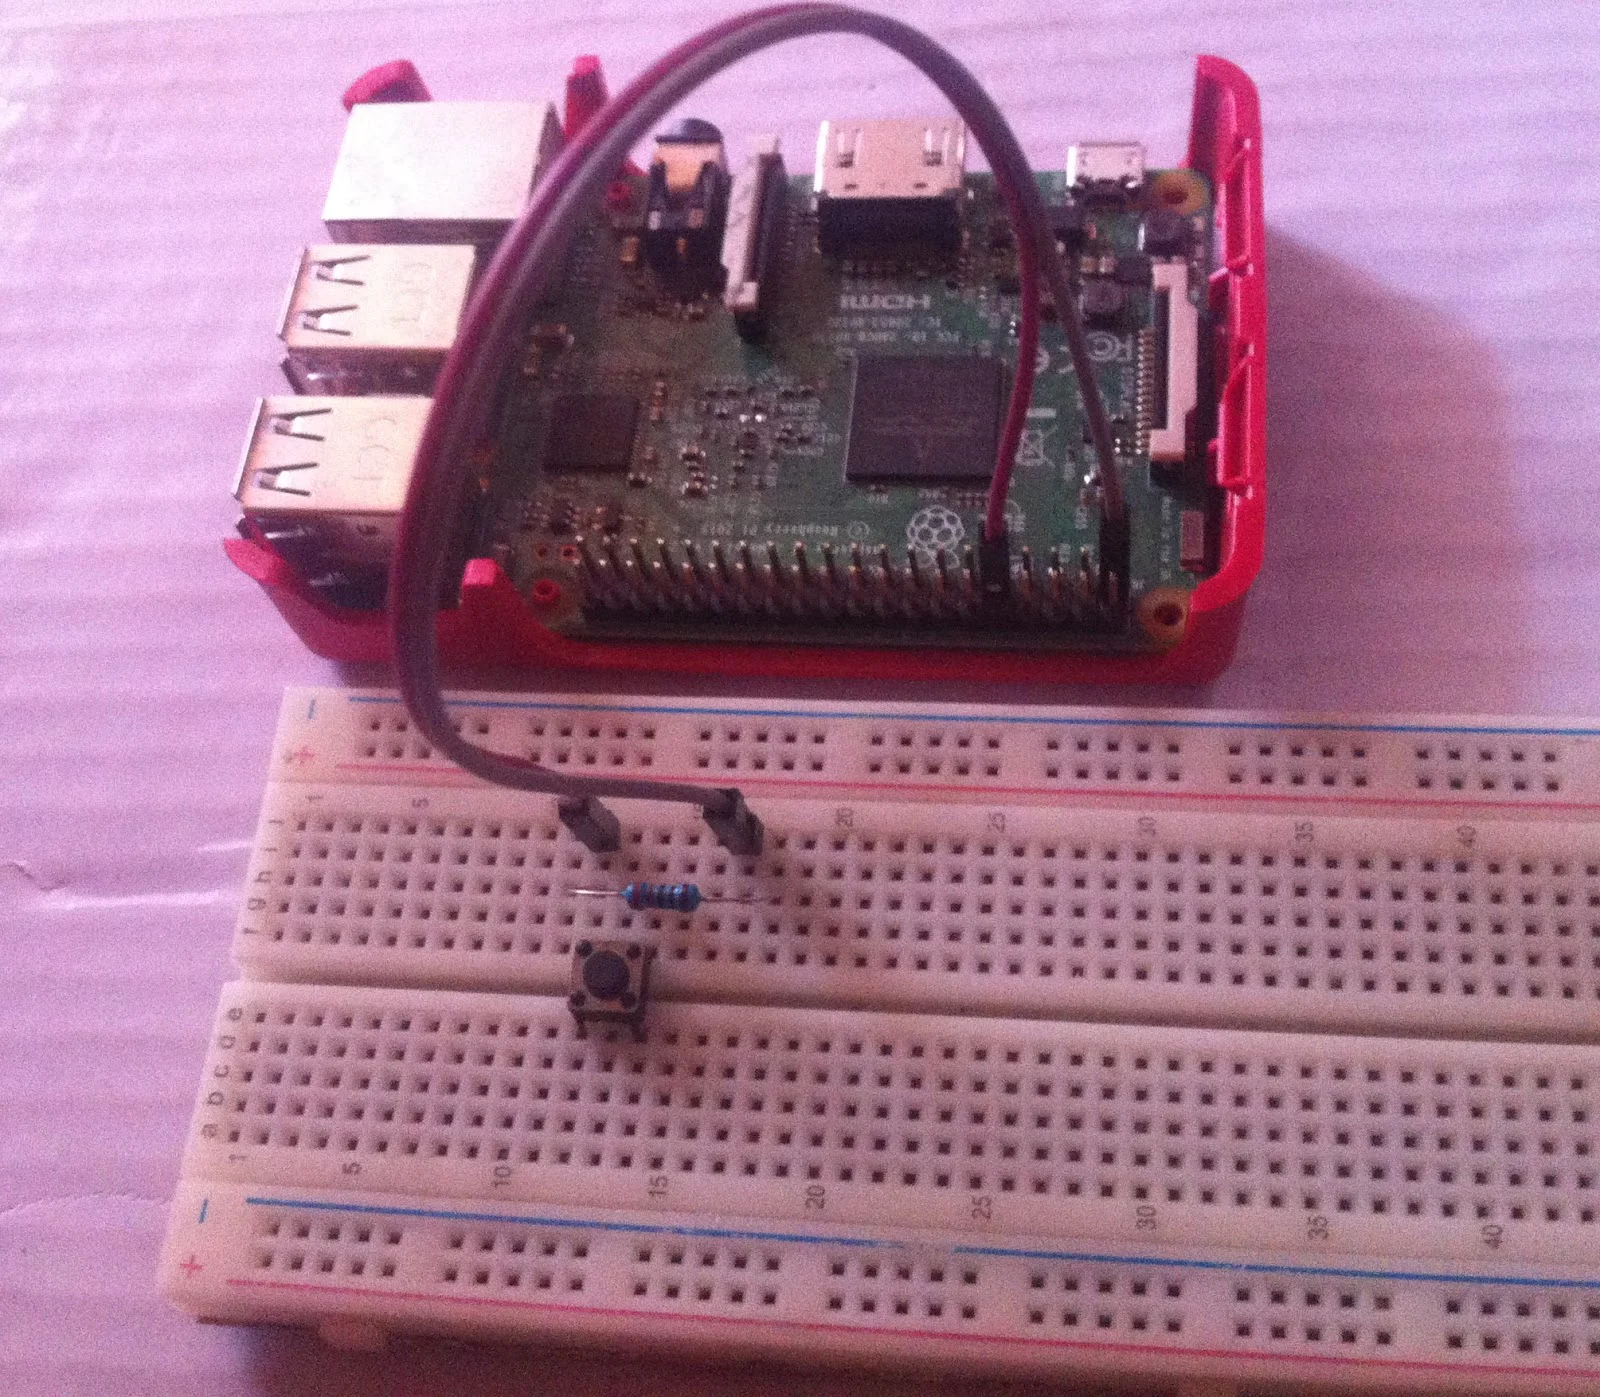 assembled hardware: raspberry pi + push button on a breadbord